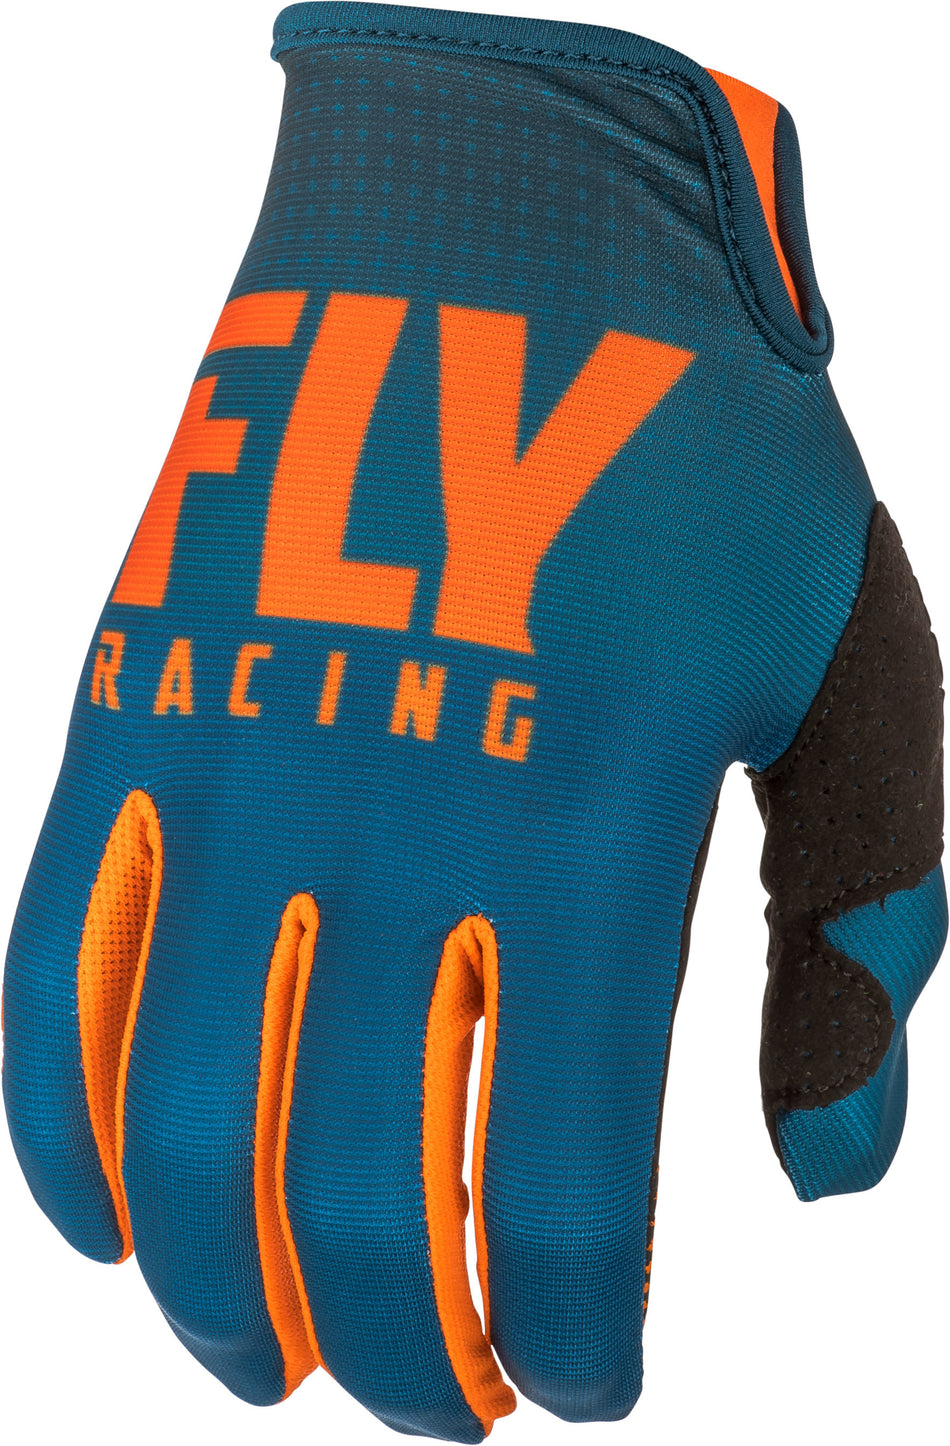 FLY RACING Lite Gloves Orange/Navy Sz 12 372-01612